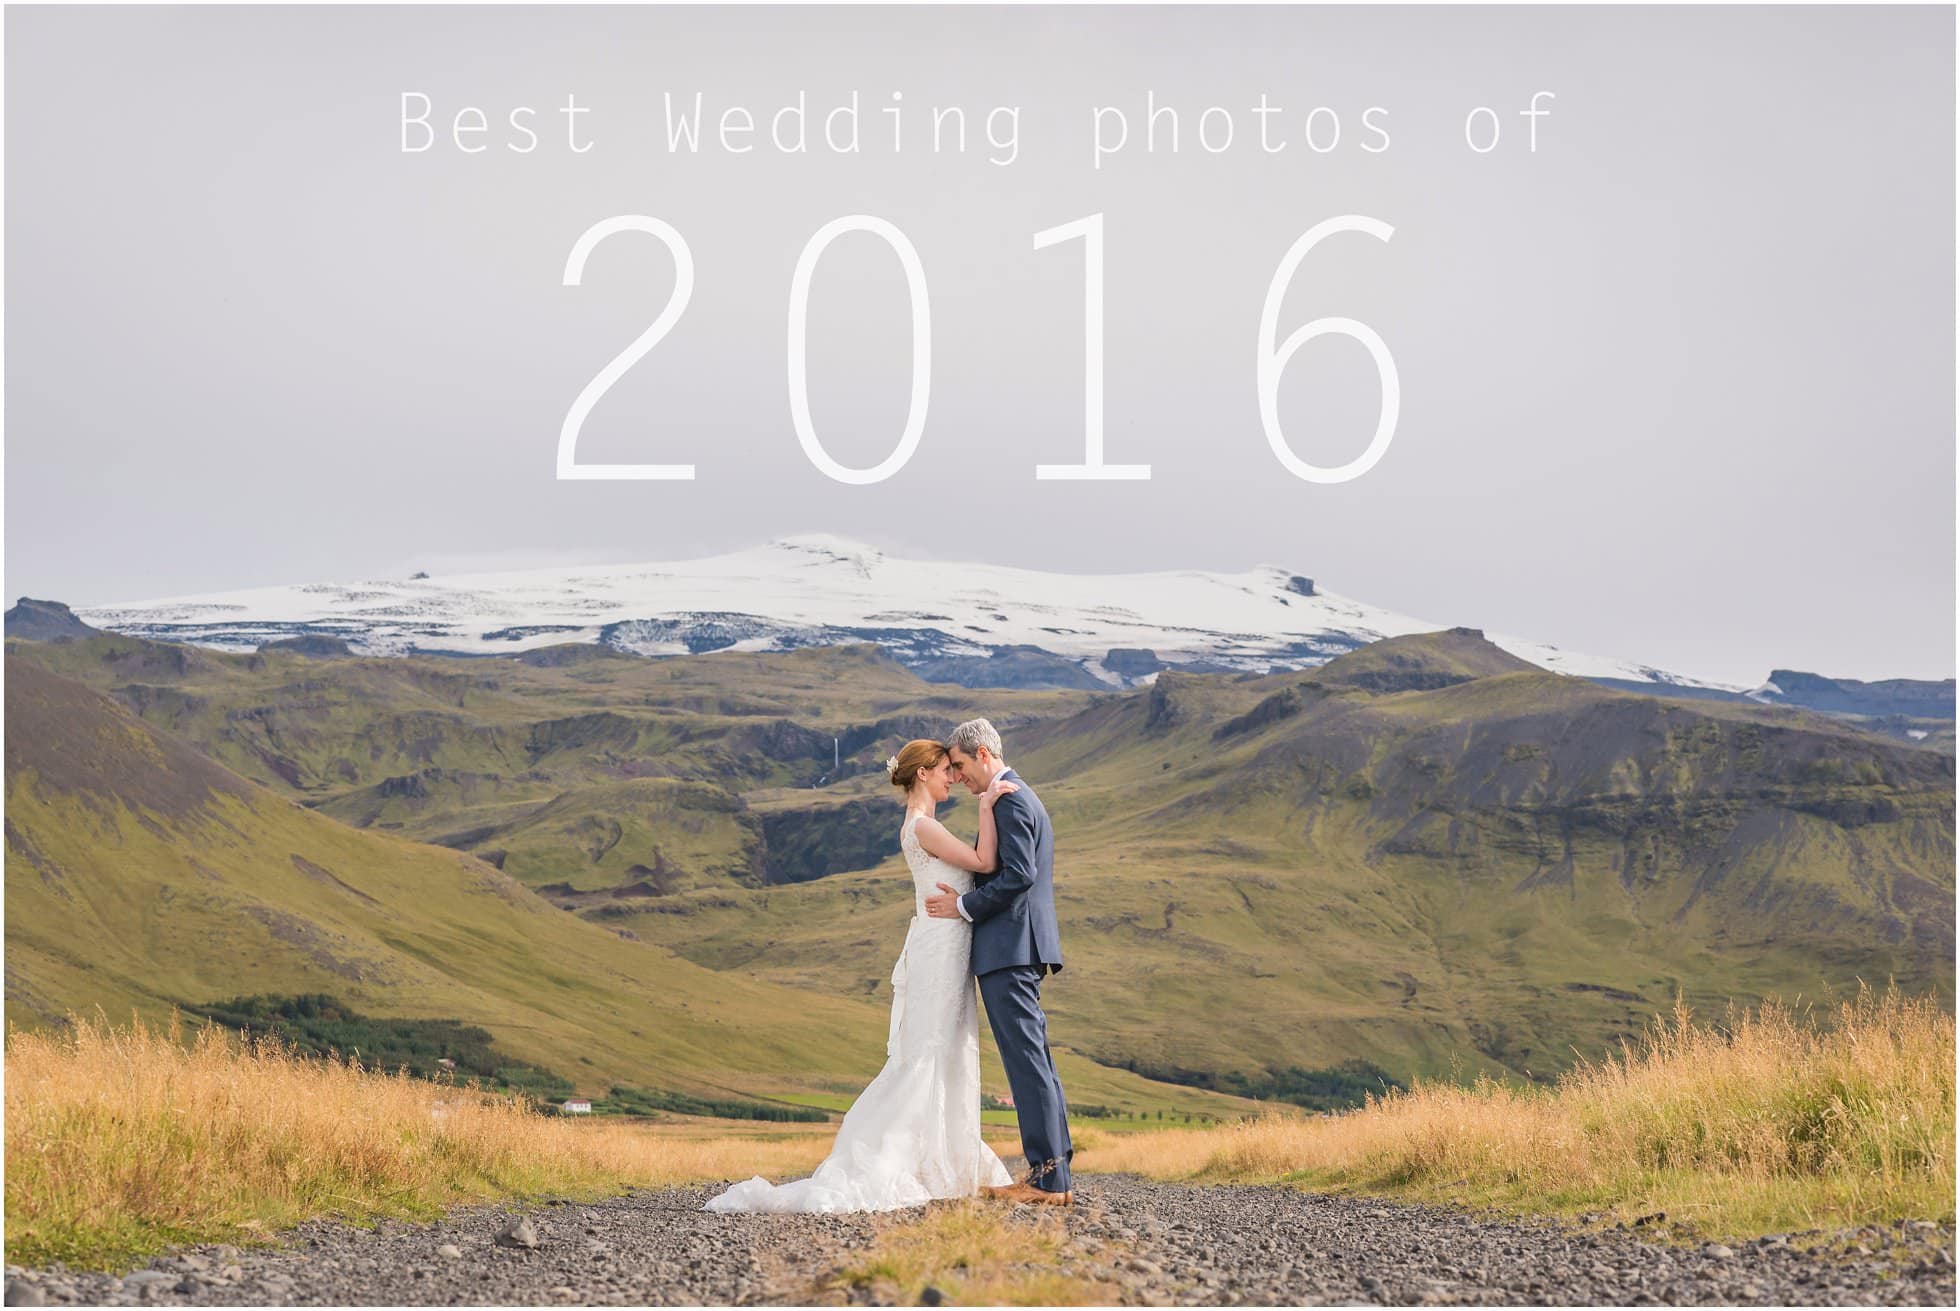 Best wedding photos of 2016